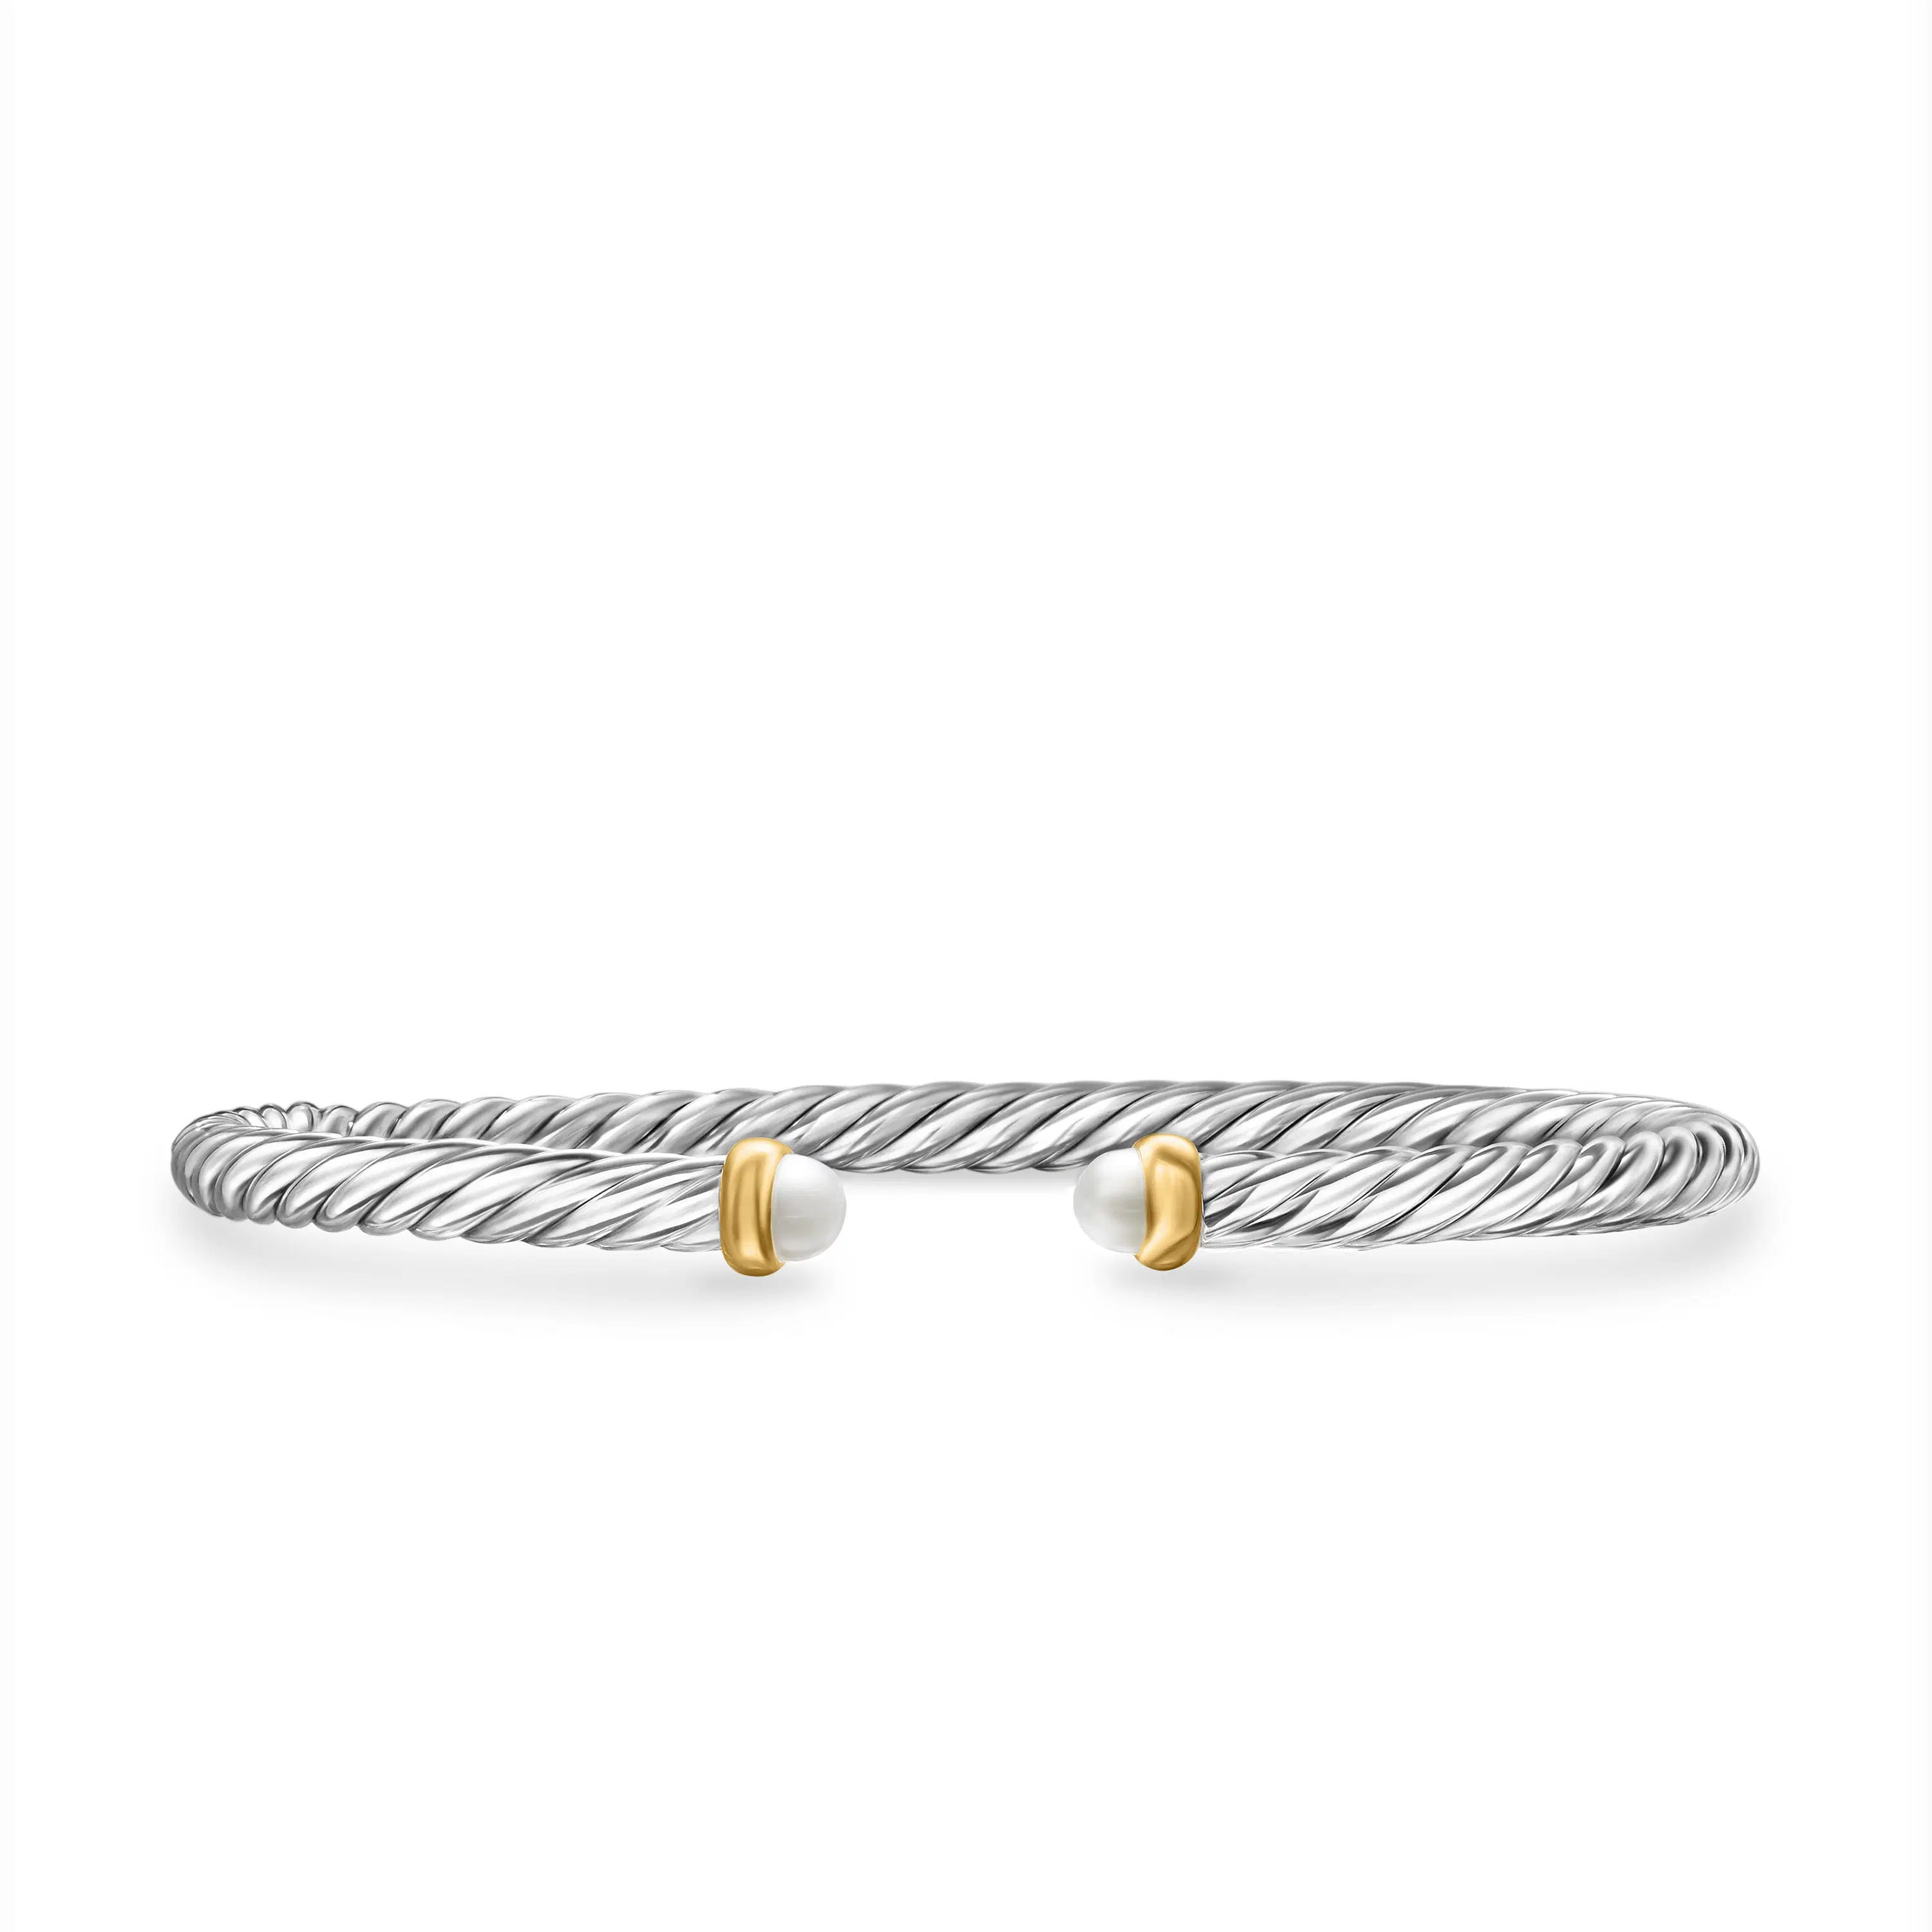 David Yurman Cable Flex Sterling Silver Bracelet with Pearl, Size Medium